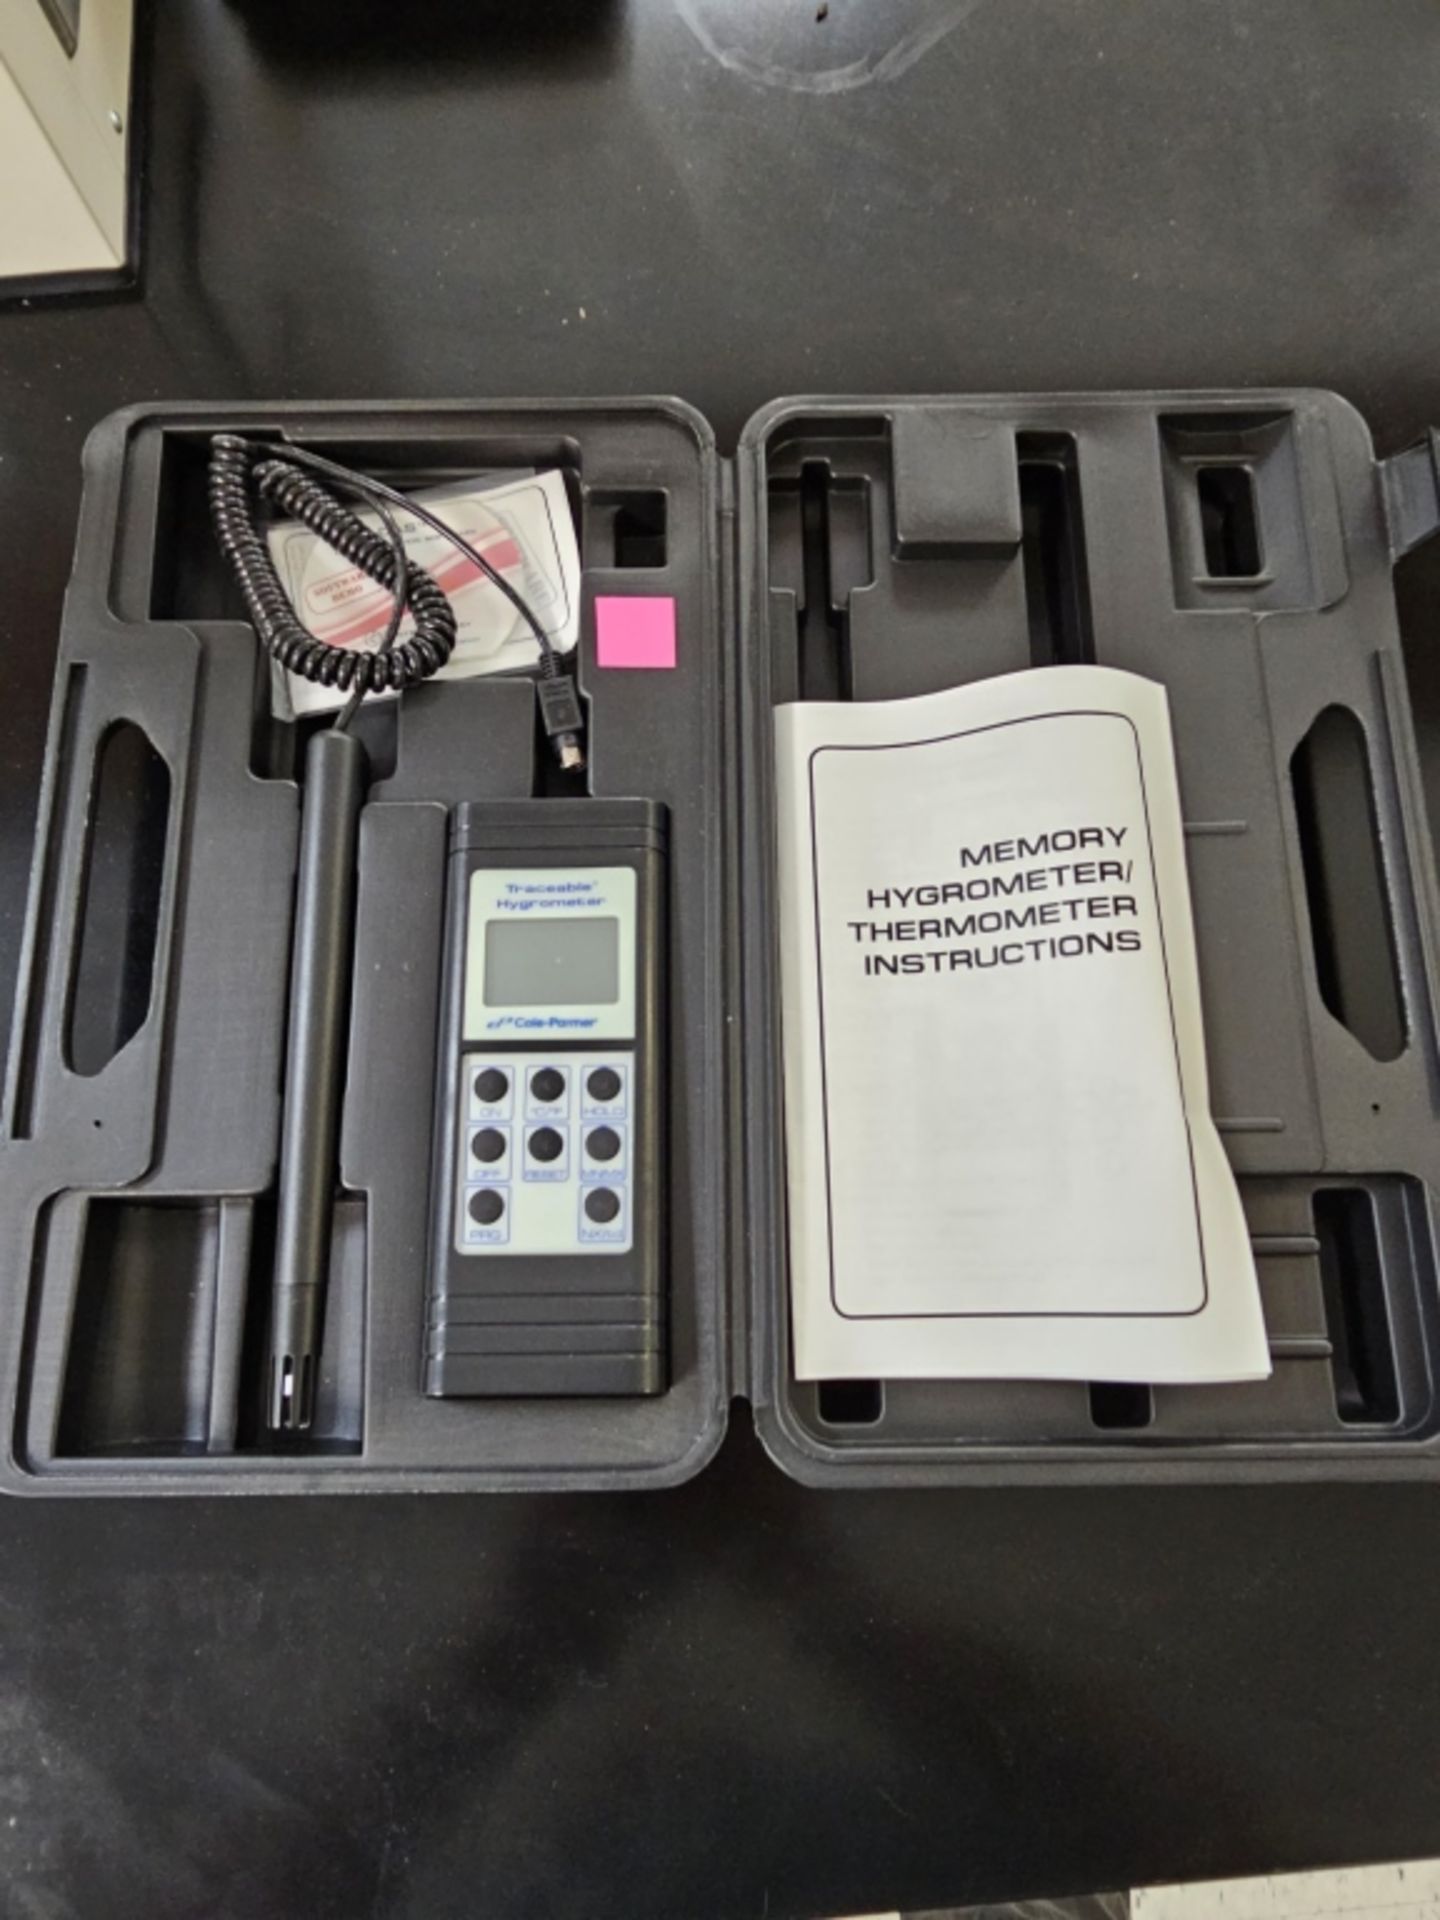 Digital Handheld Hygrometer / Thermometer